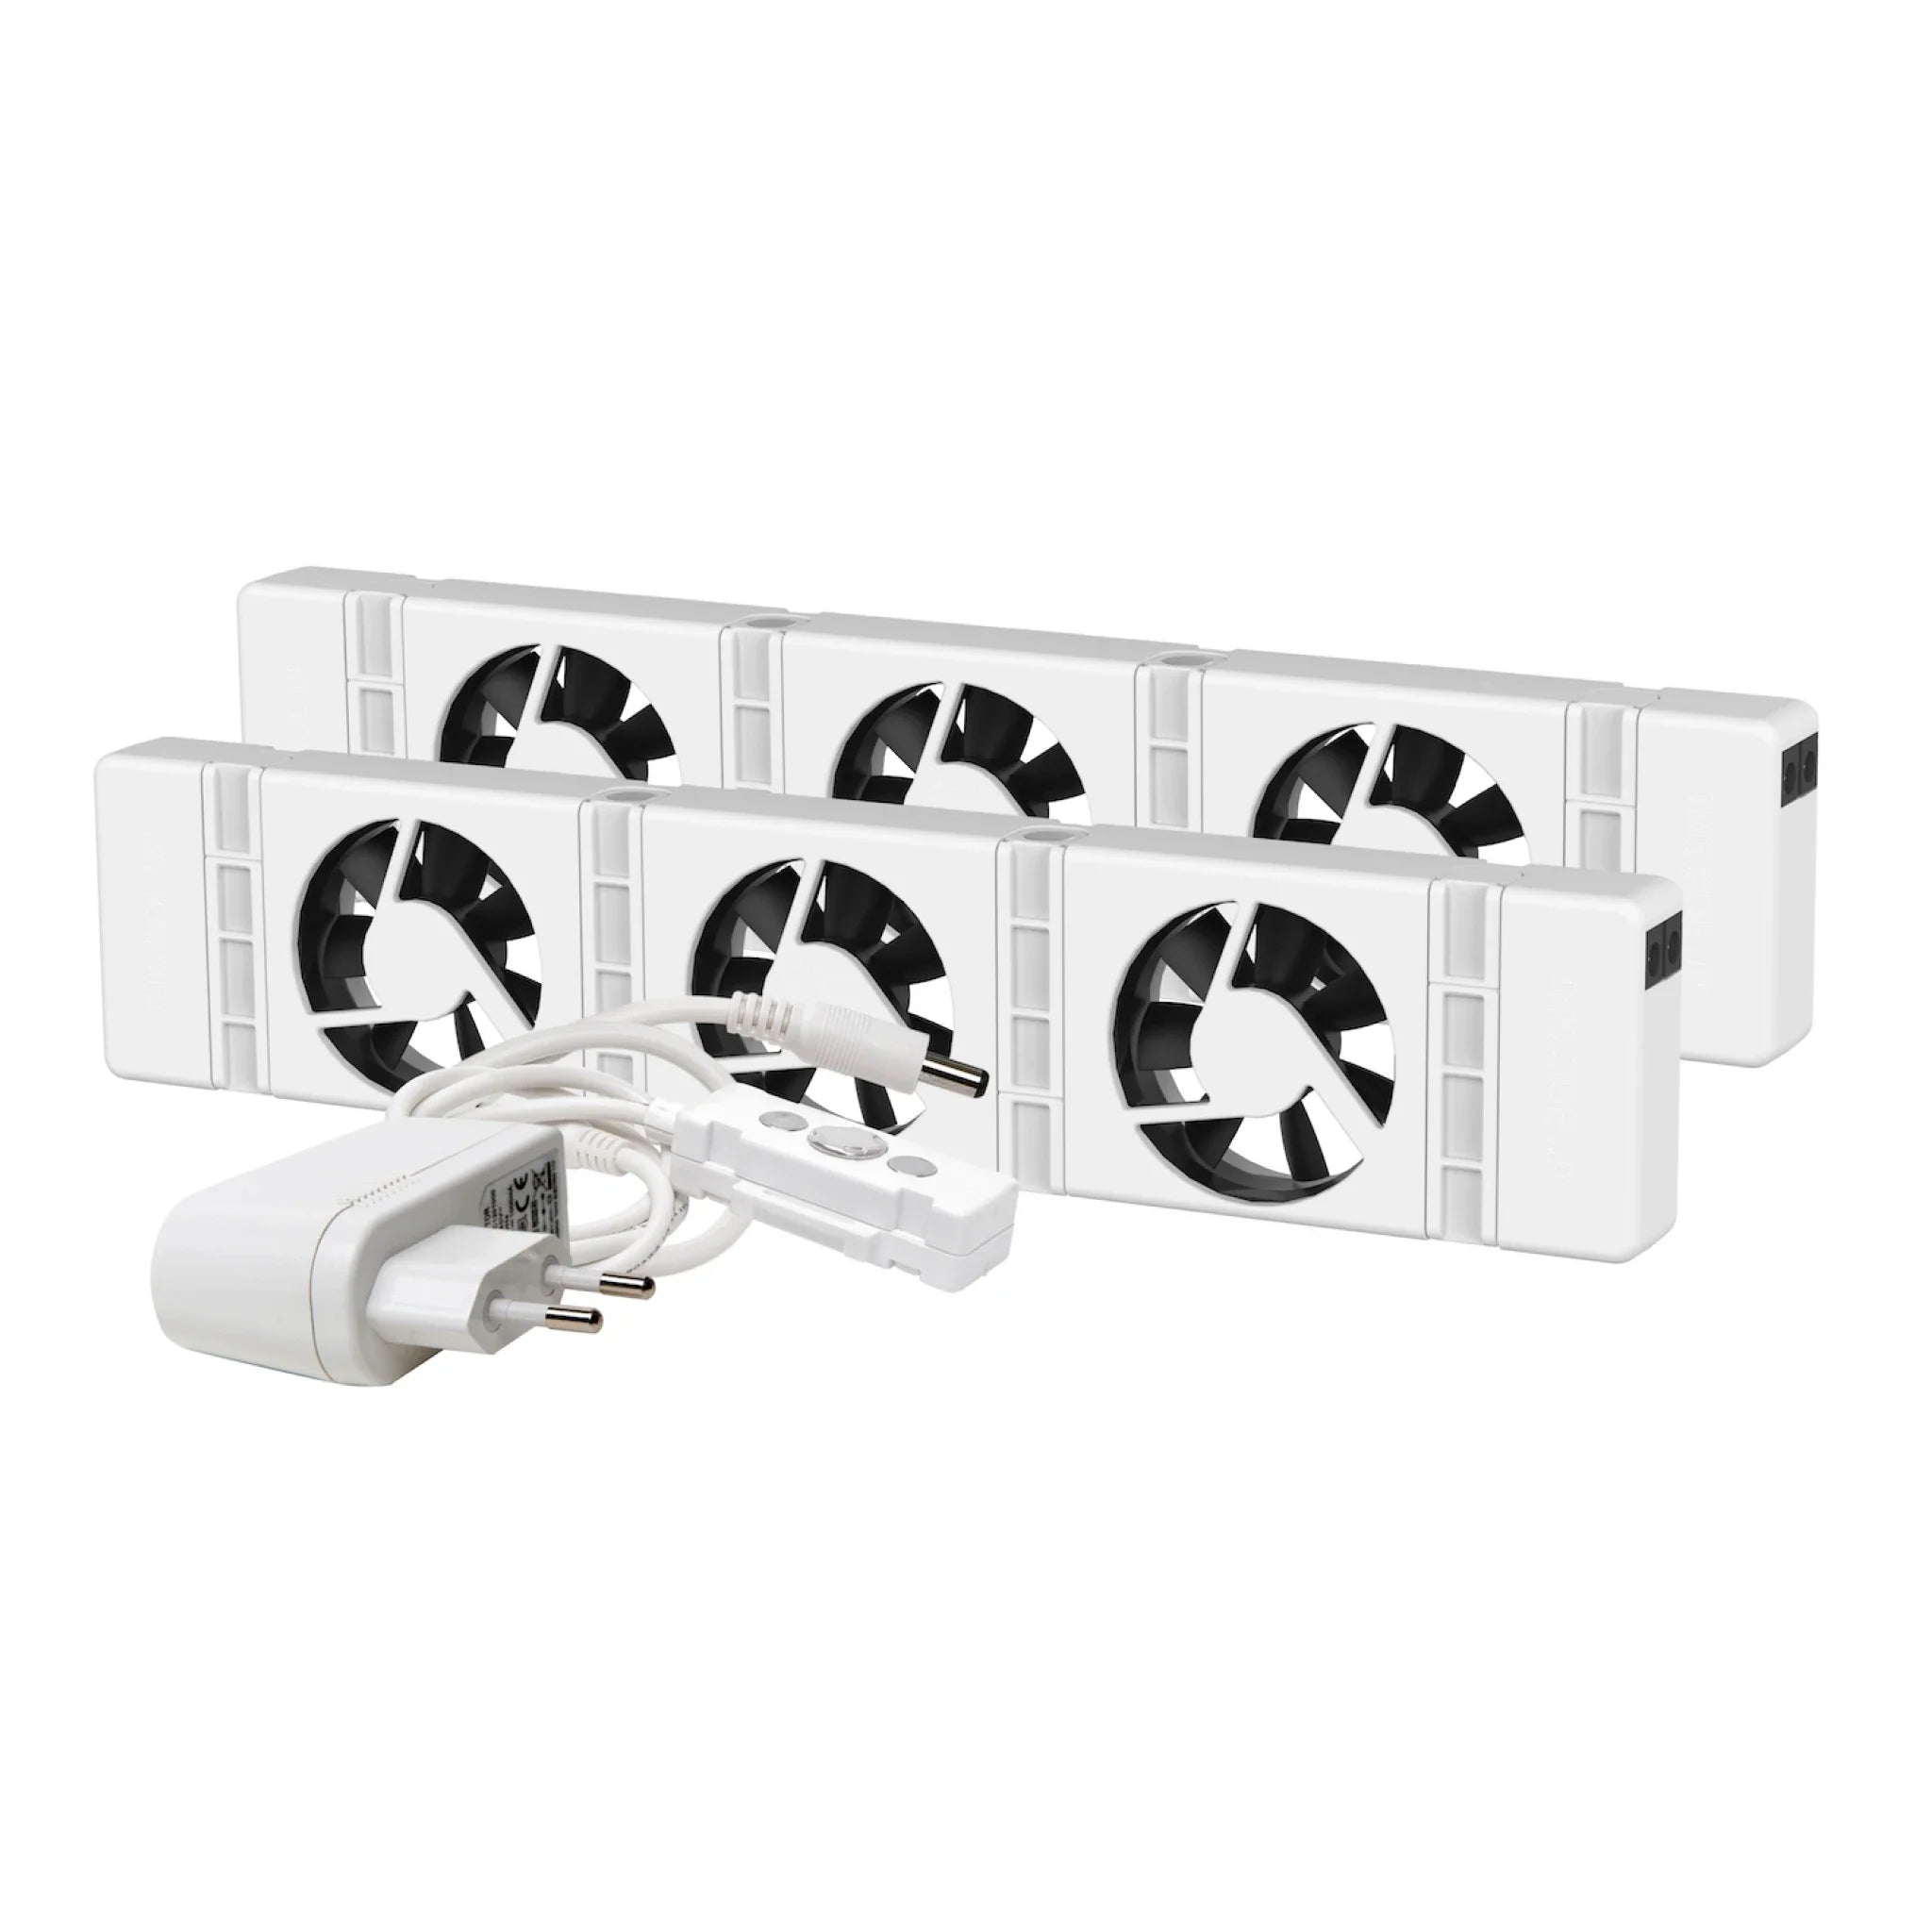 SpeedComfort radiatorventilator – Duoset